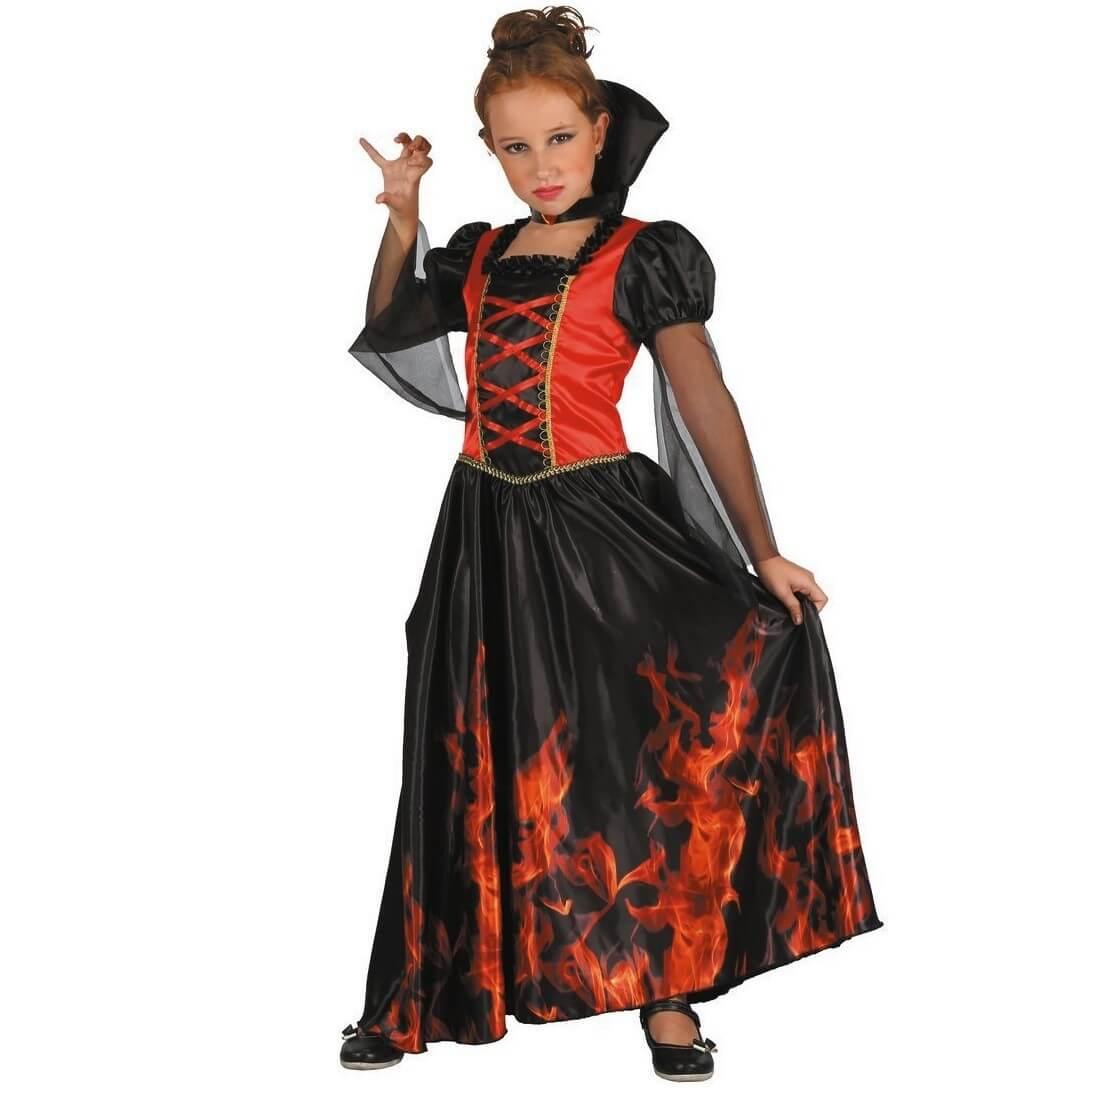 91219 age 10 12 ans costume deguisement fille halloween vampiresse flamboyante